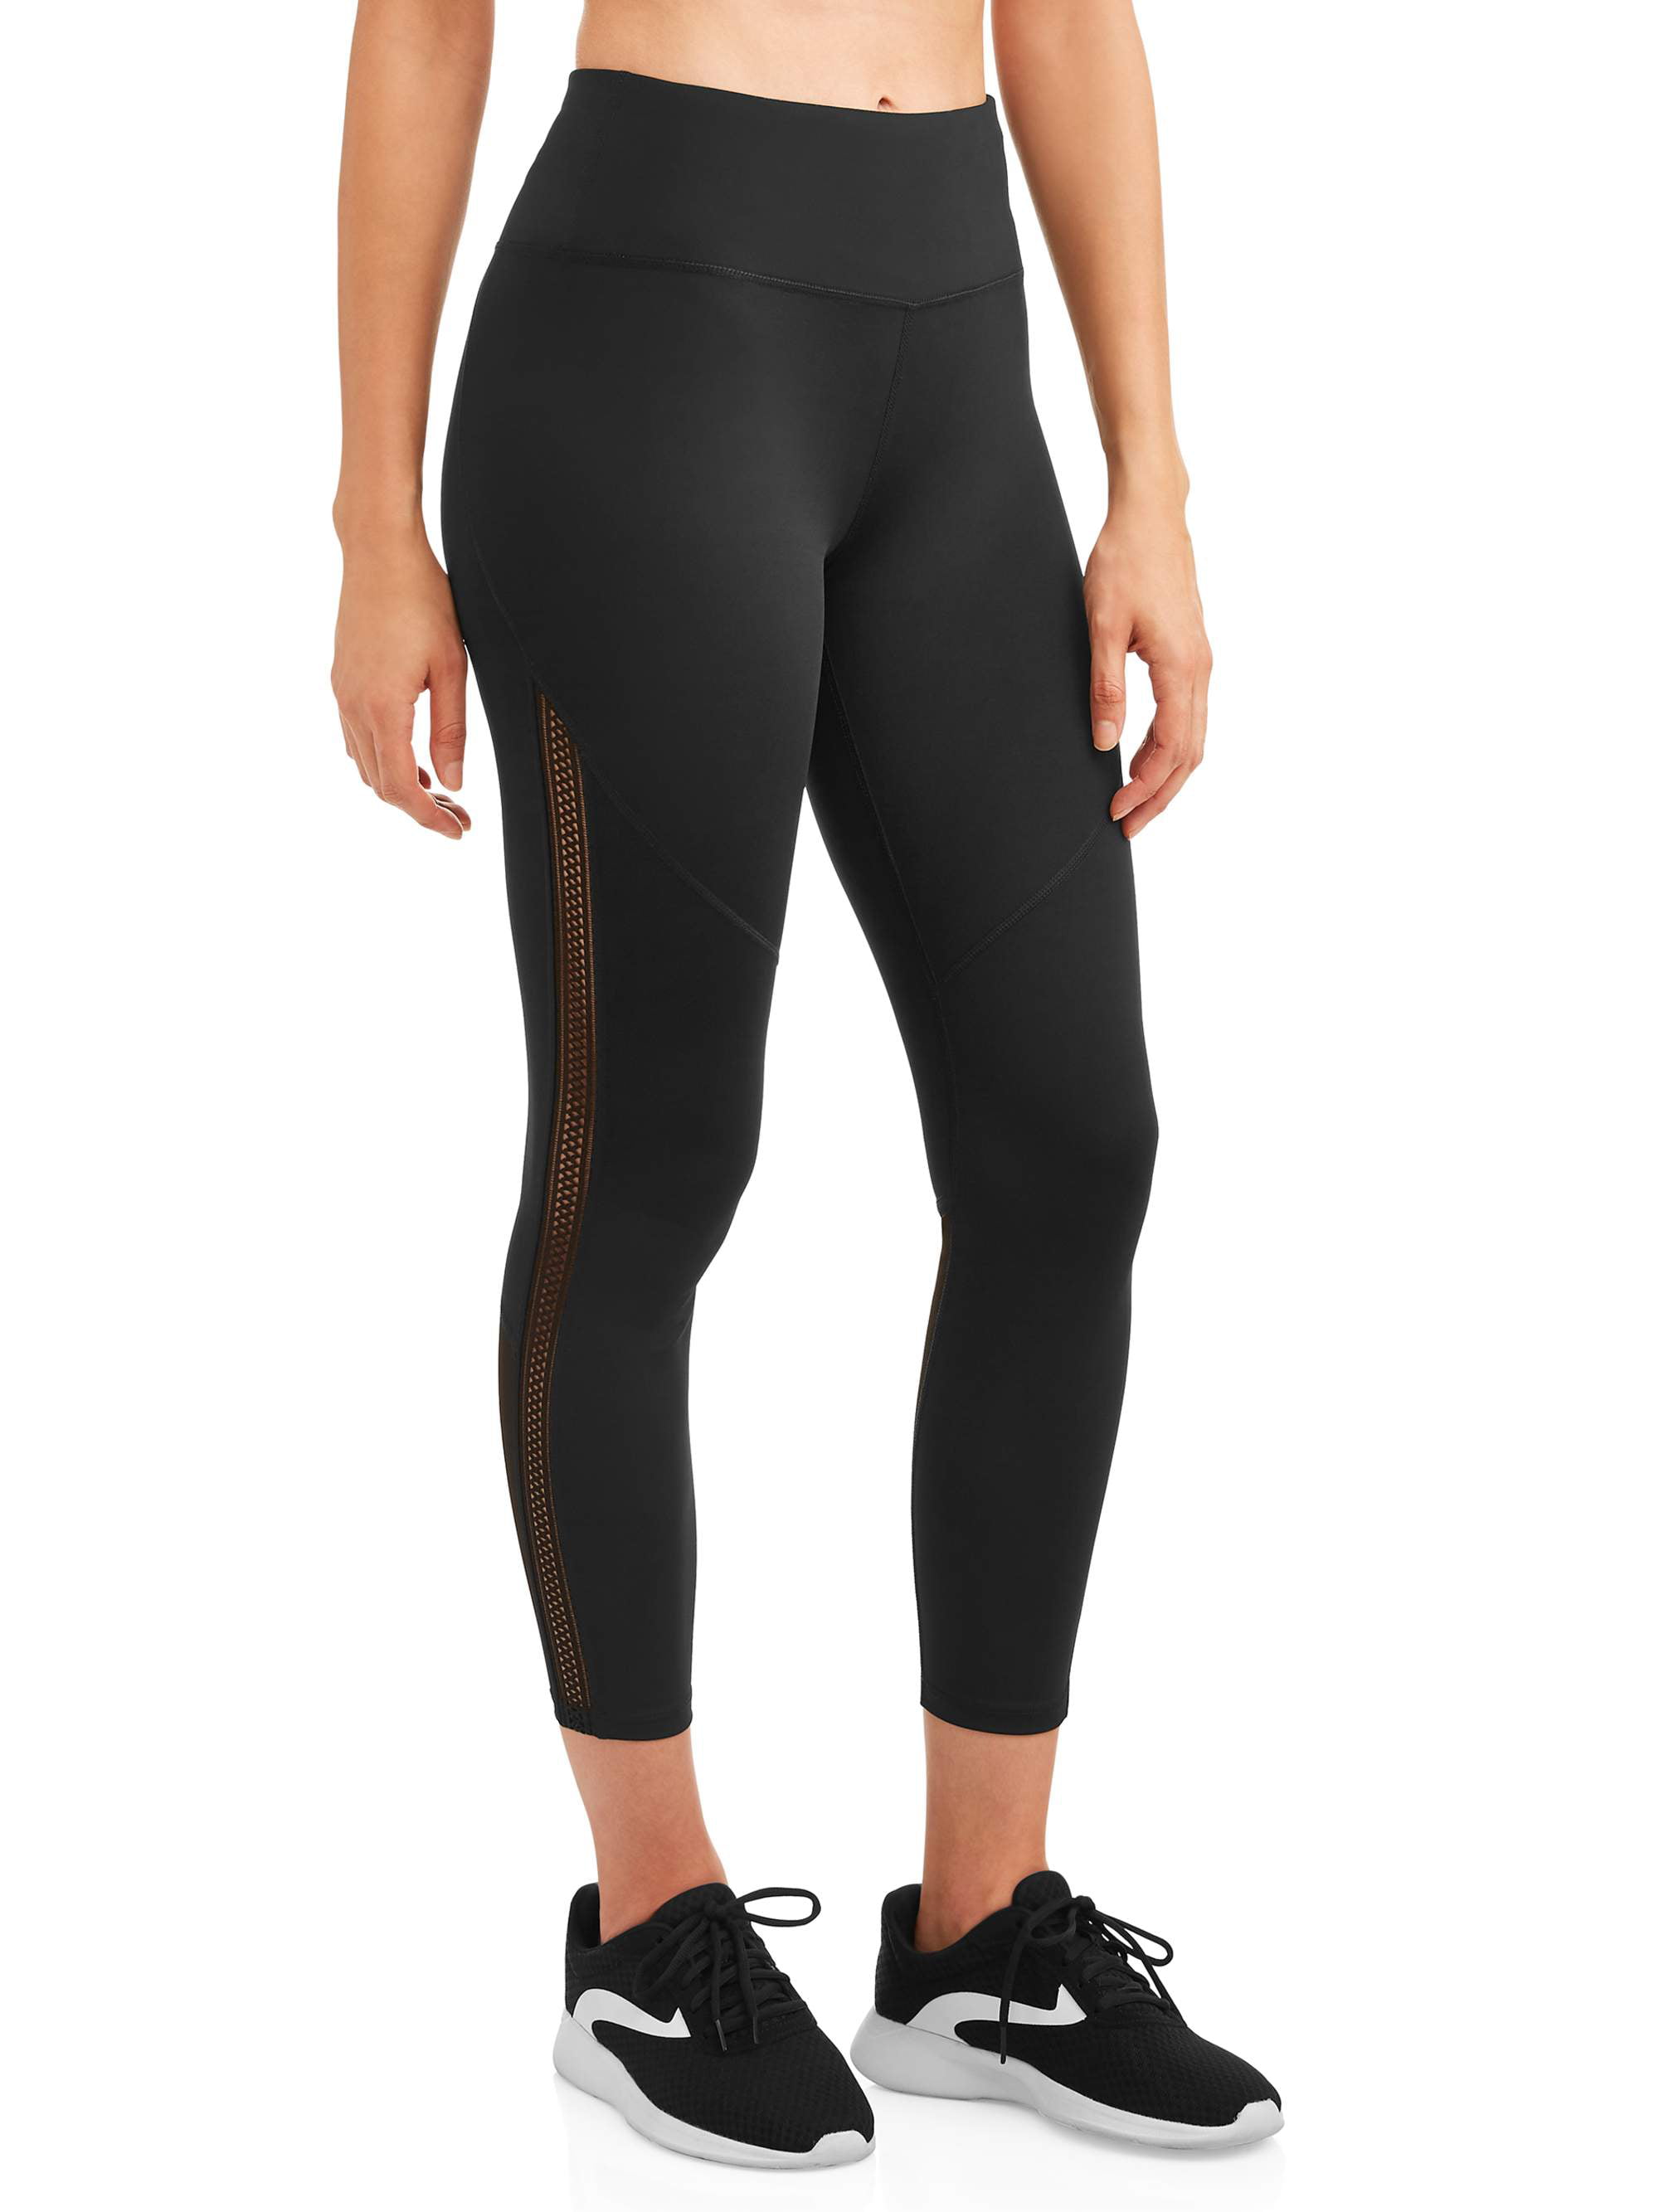 Avia, Pants & Jumpsuits, Avia Capri Activewear Leggings Capris Workout  Gym Running Mesh Gray Black Sz L